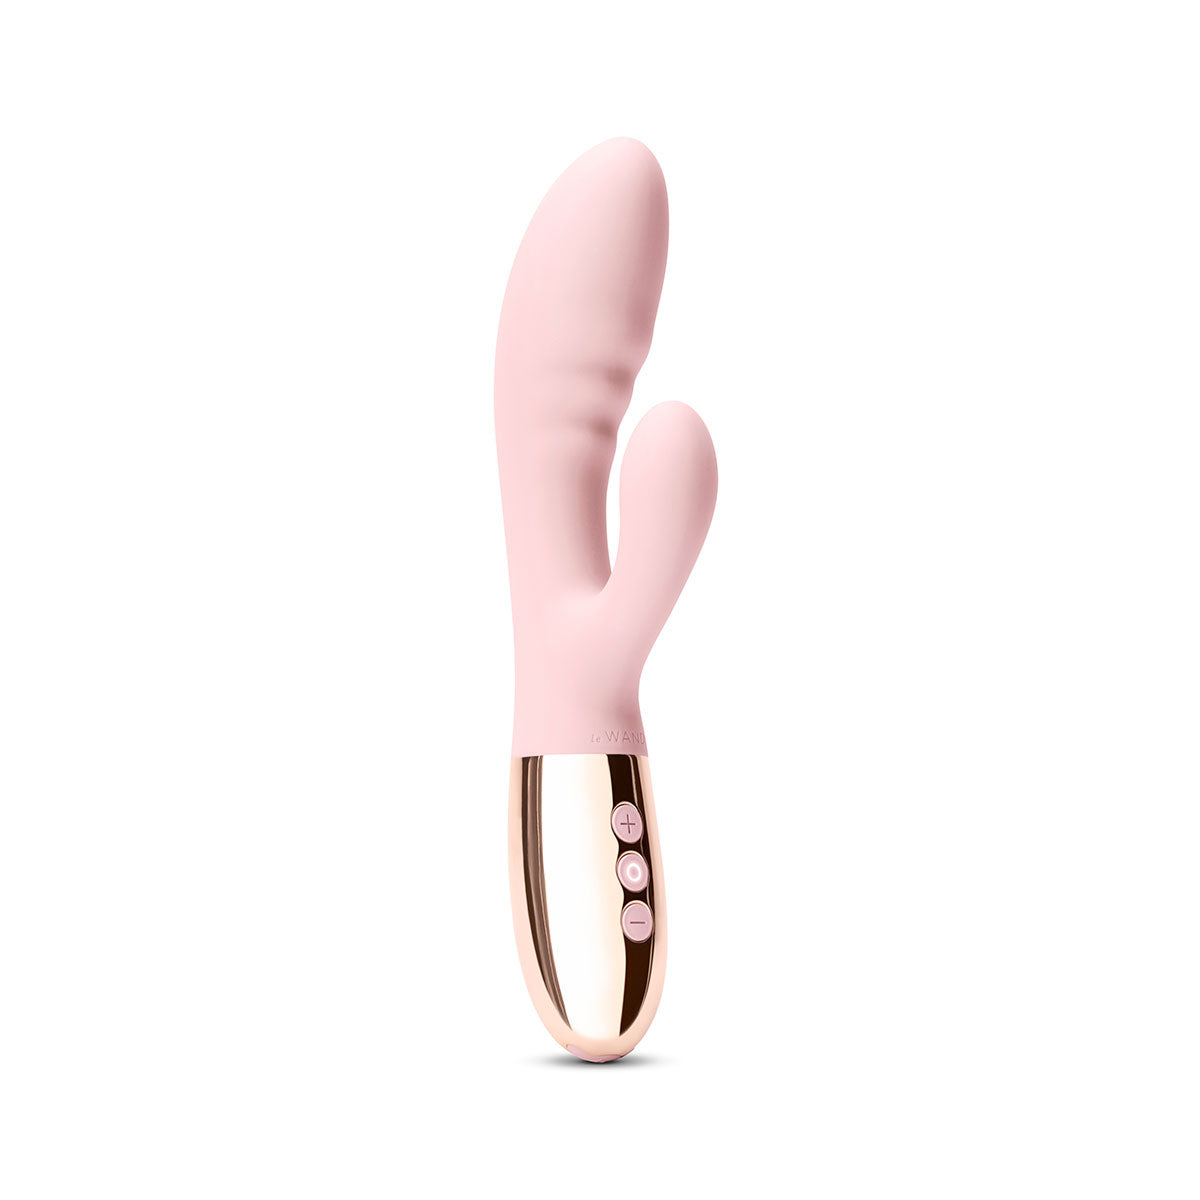 Le Wand Blend Rechargeable Double-Motor Silicone Rabbit Vibrator Rose Gold - Zateo Joy